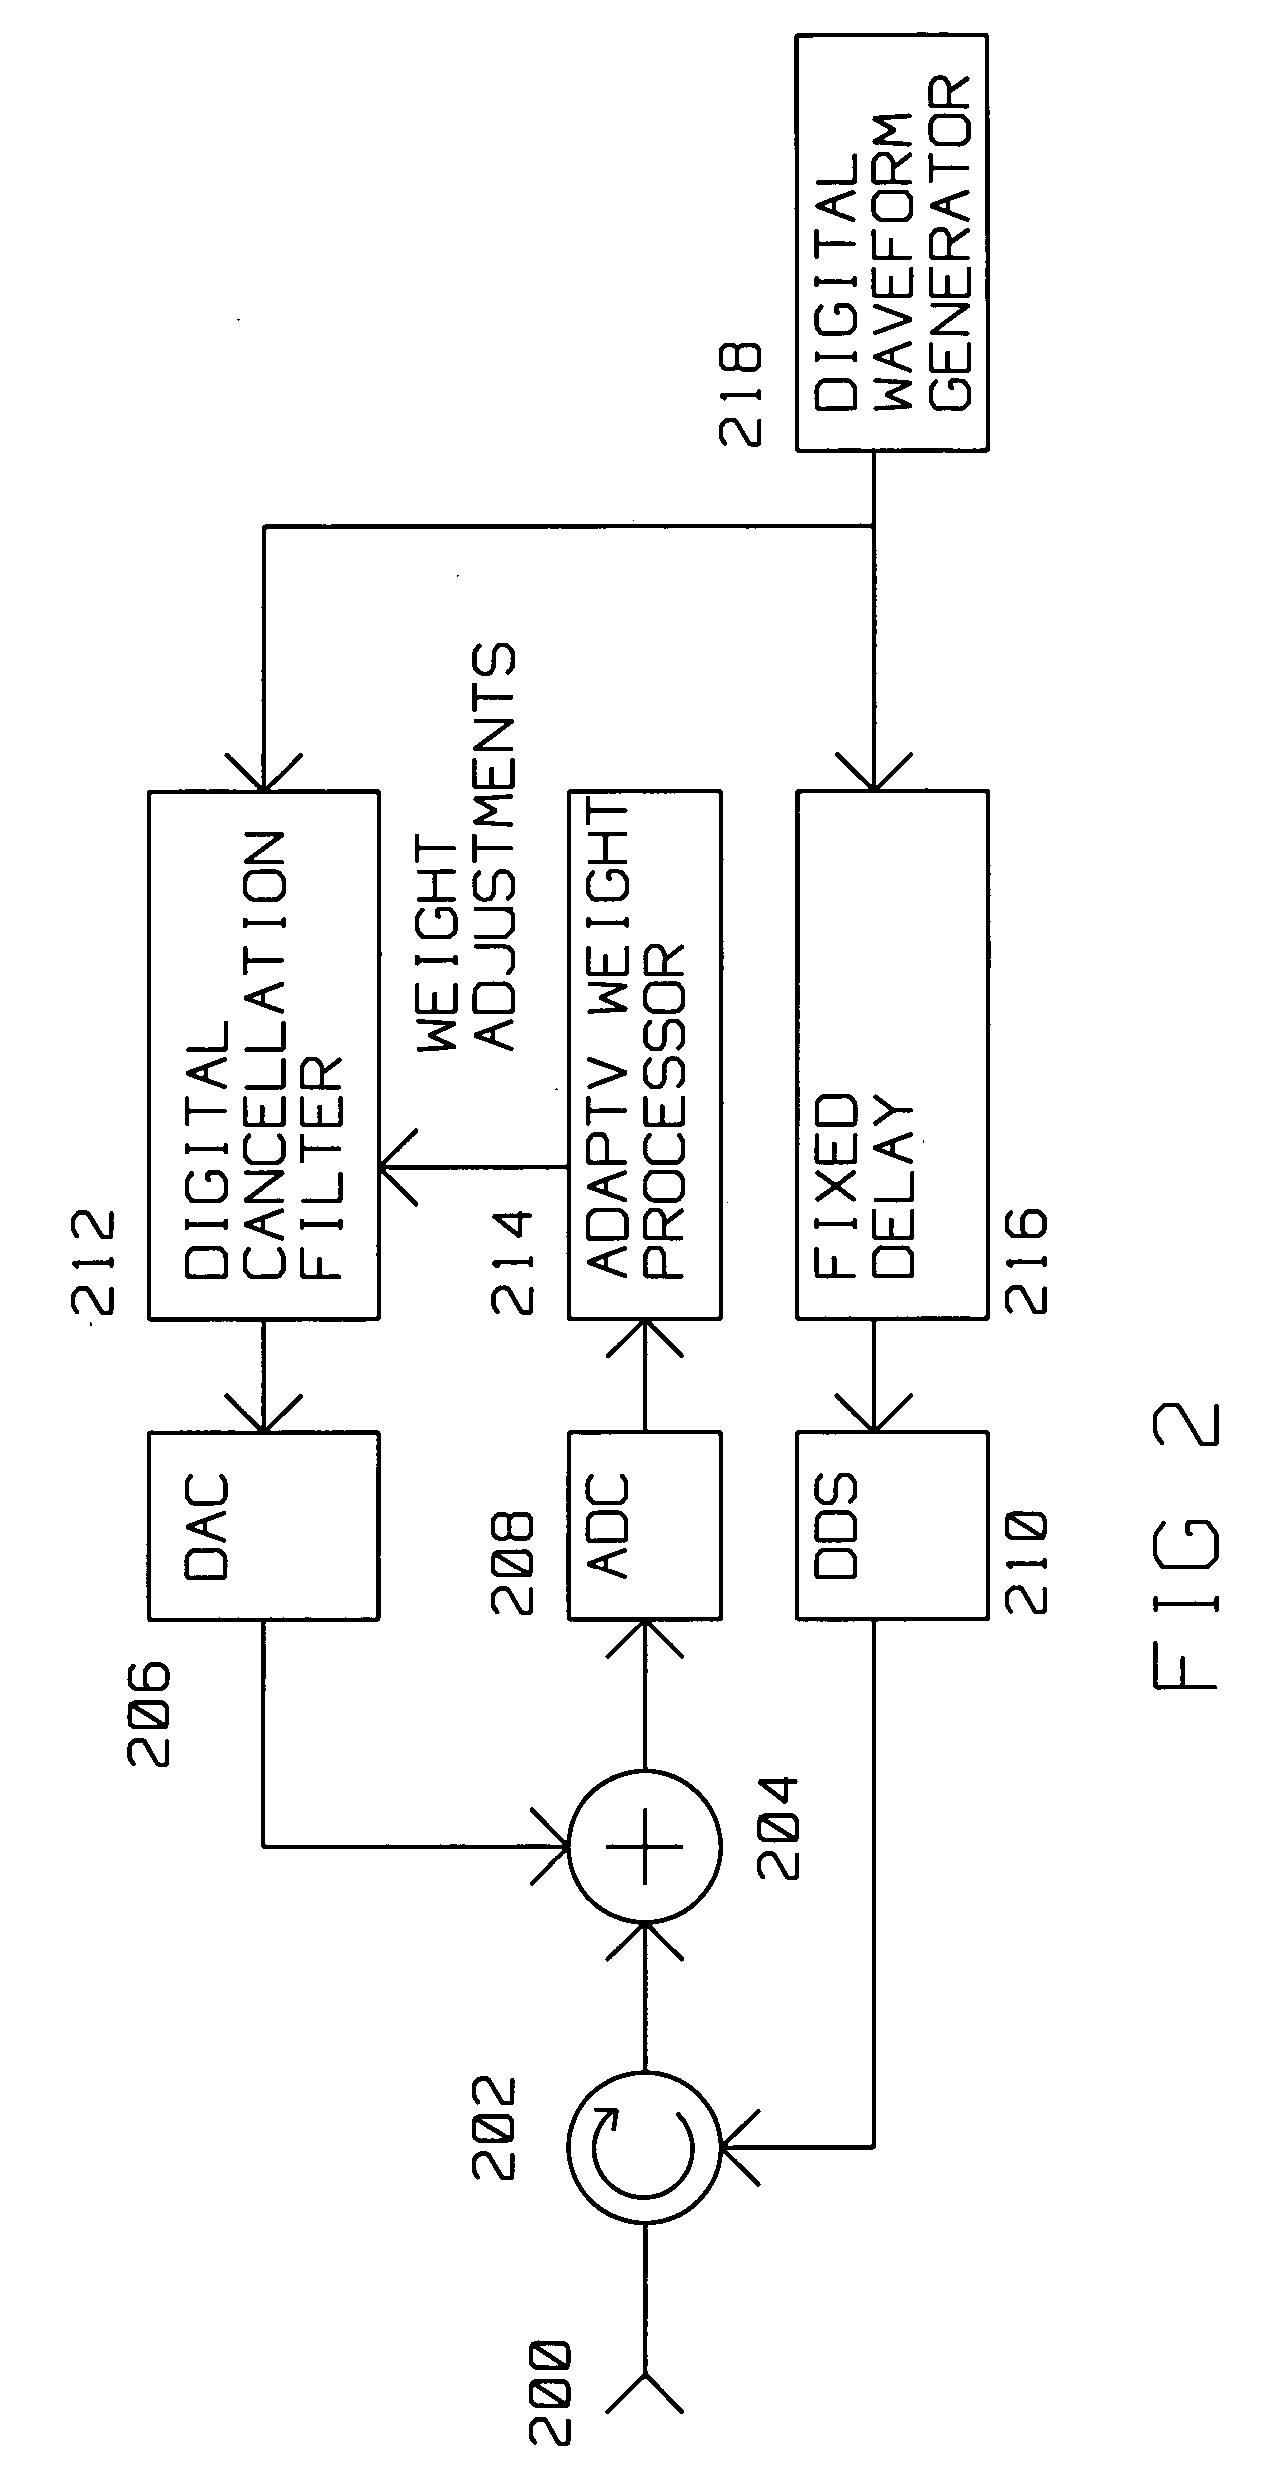 Technique for compensation of transmit leakage in radar receiver